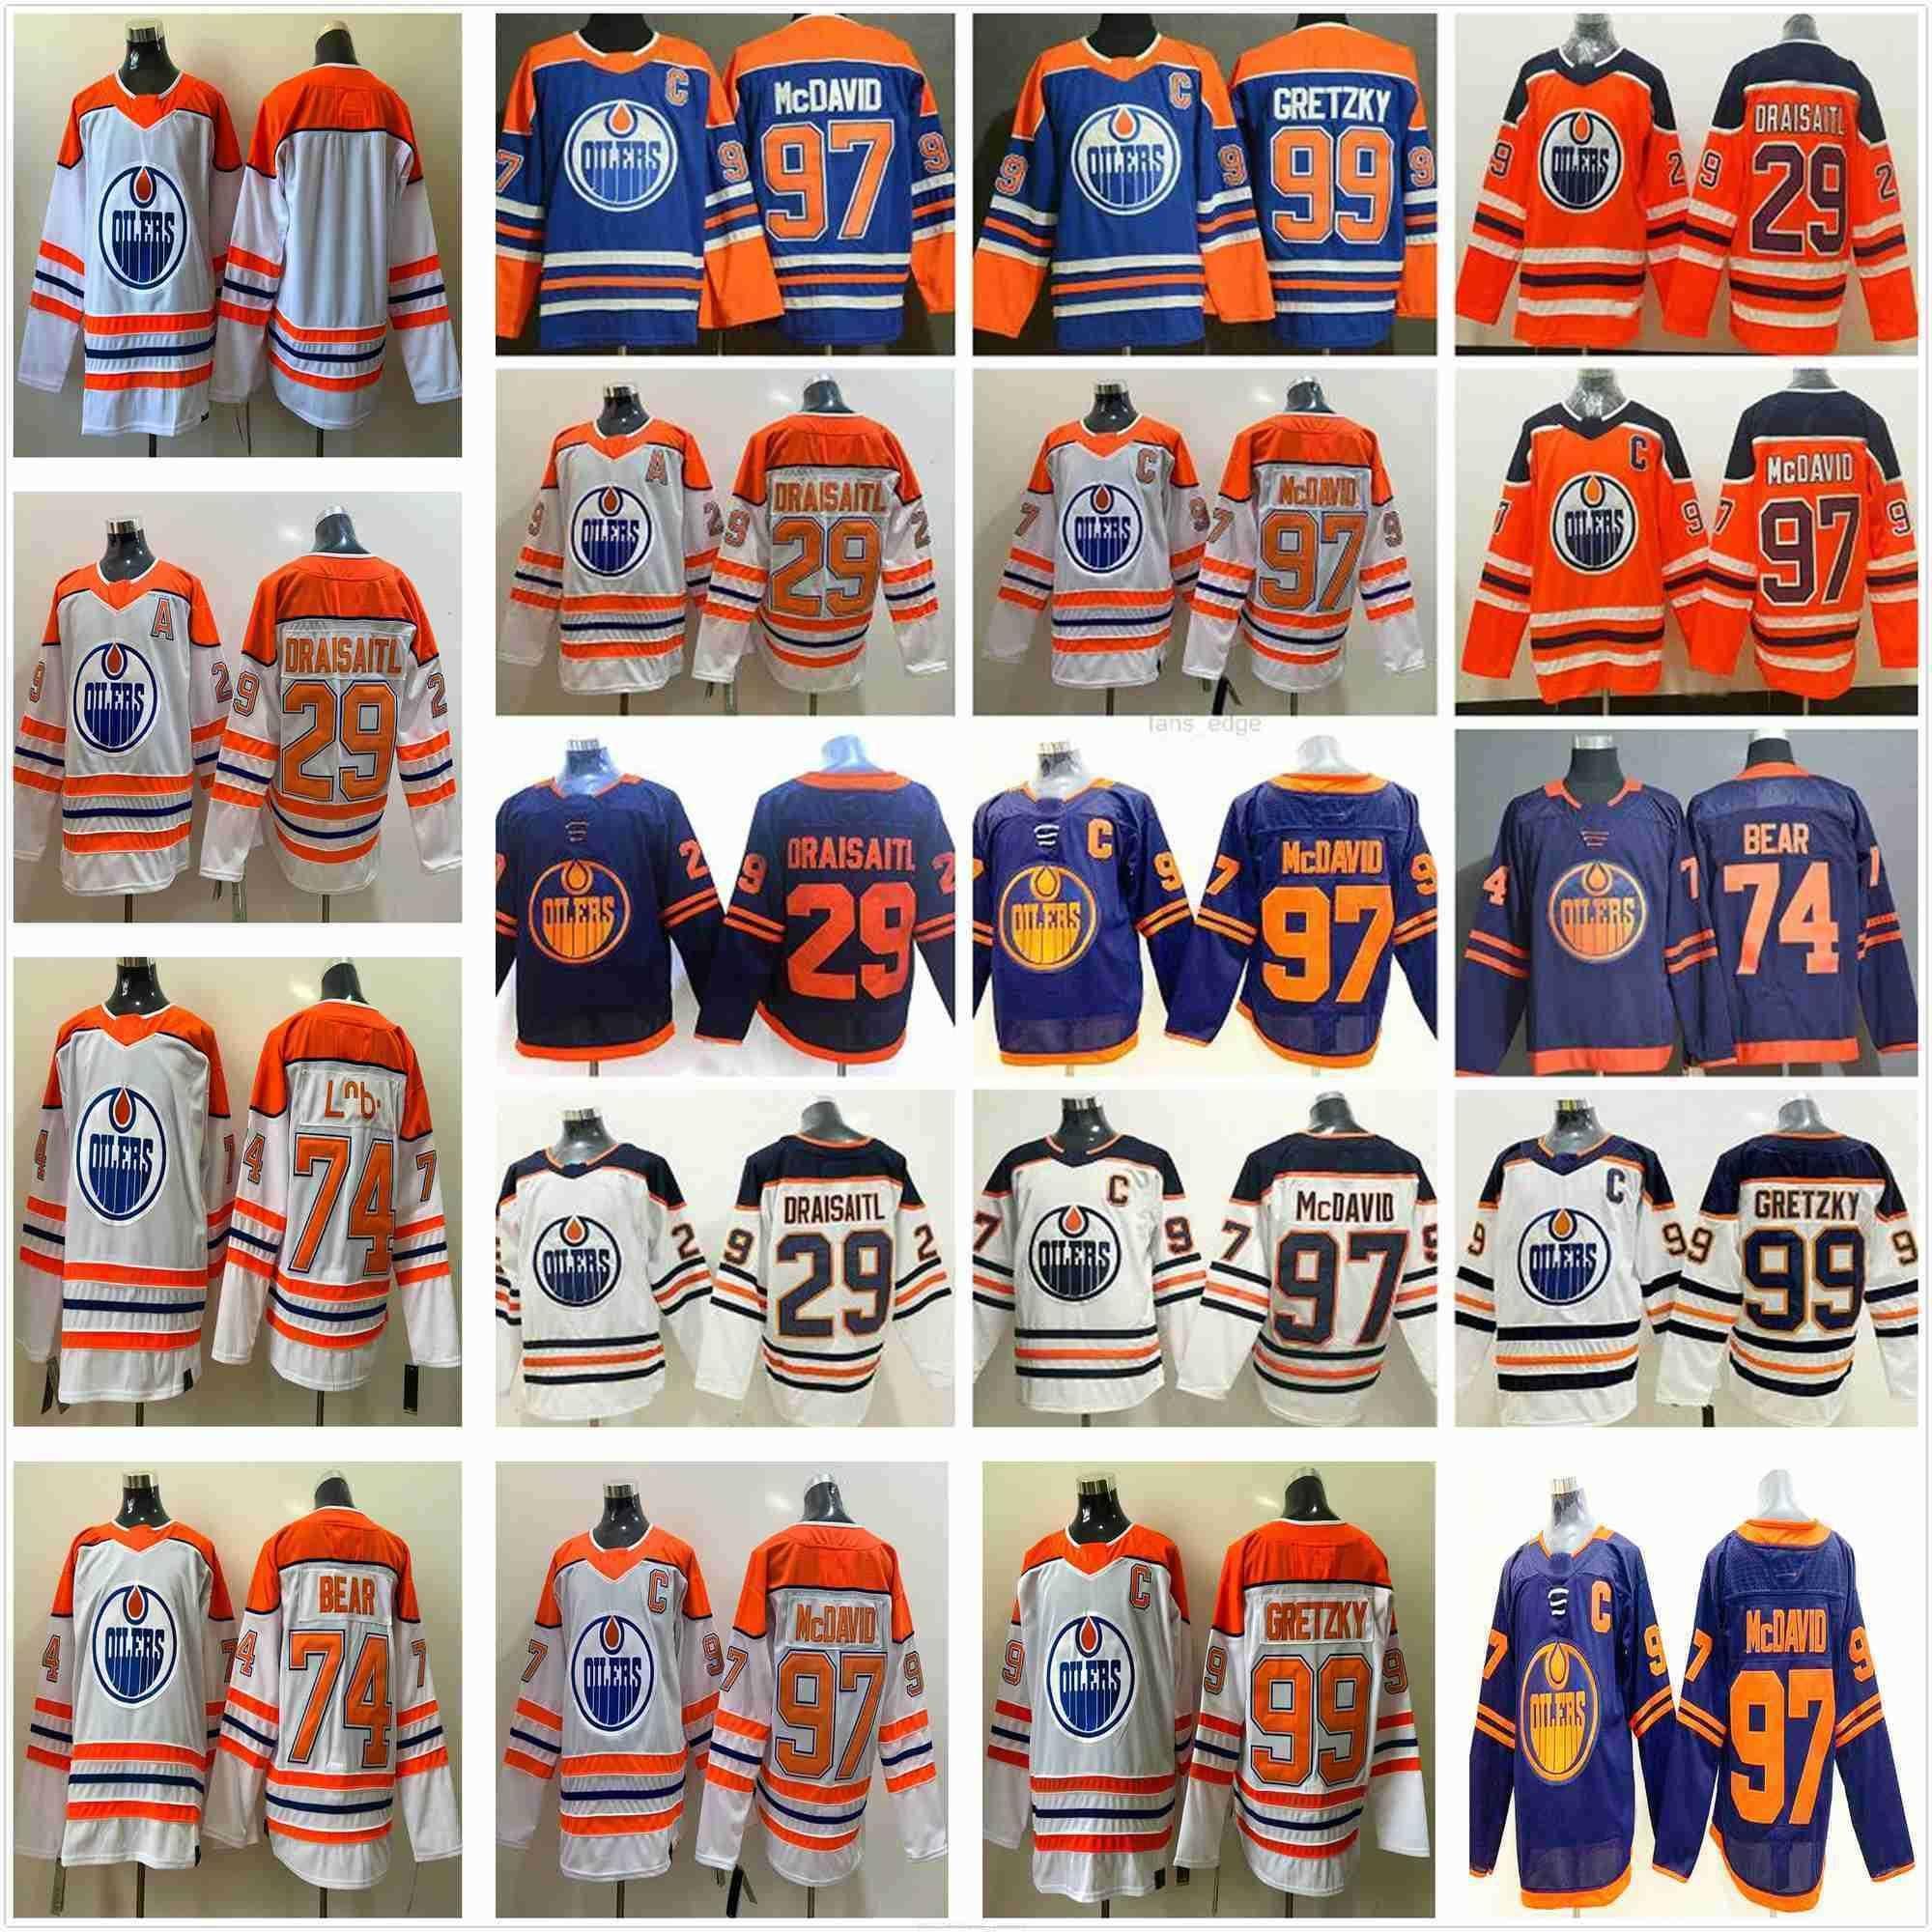 

Edmonton Oilers Hockey Jerseys 97 Connor McDavid 29 Leon Draisaitl 99 Wayne Gretzky 93 Ryan Nugent Hopkins 74 Ethan Bear''nhl''ice, As picture